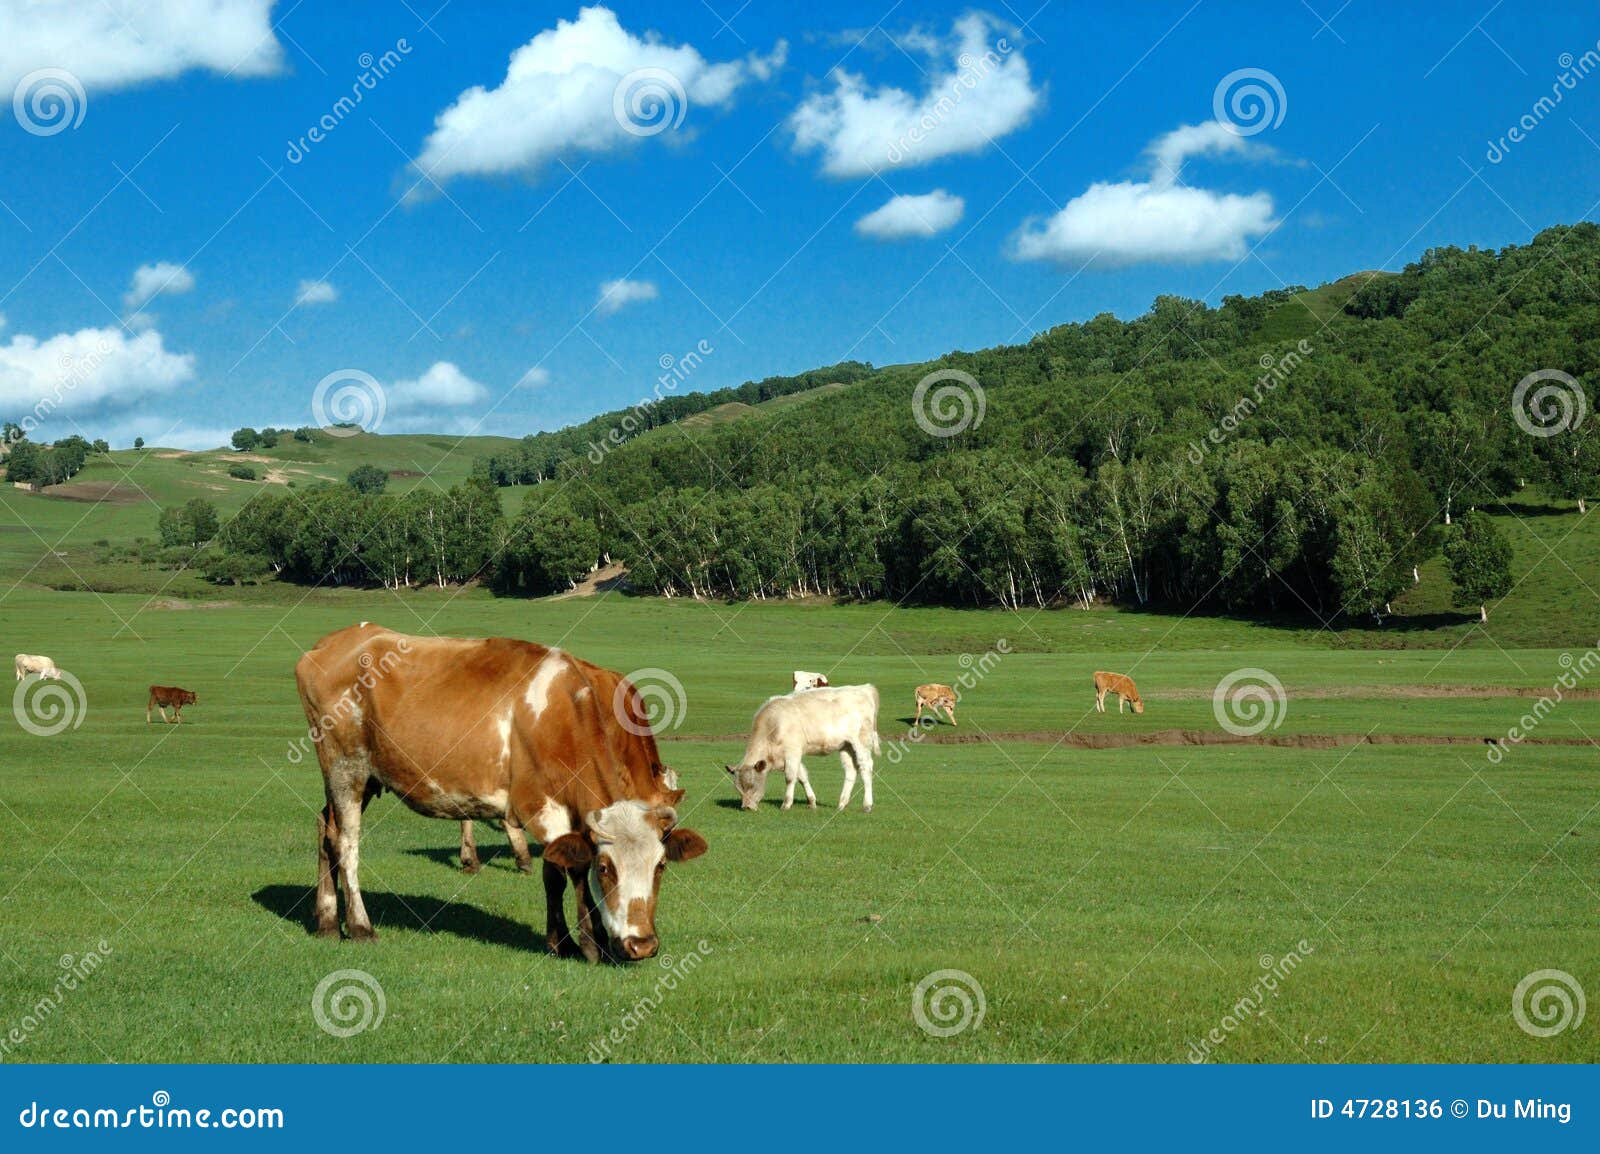 cows on grassland